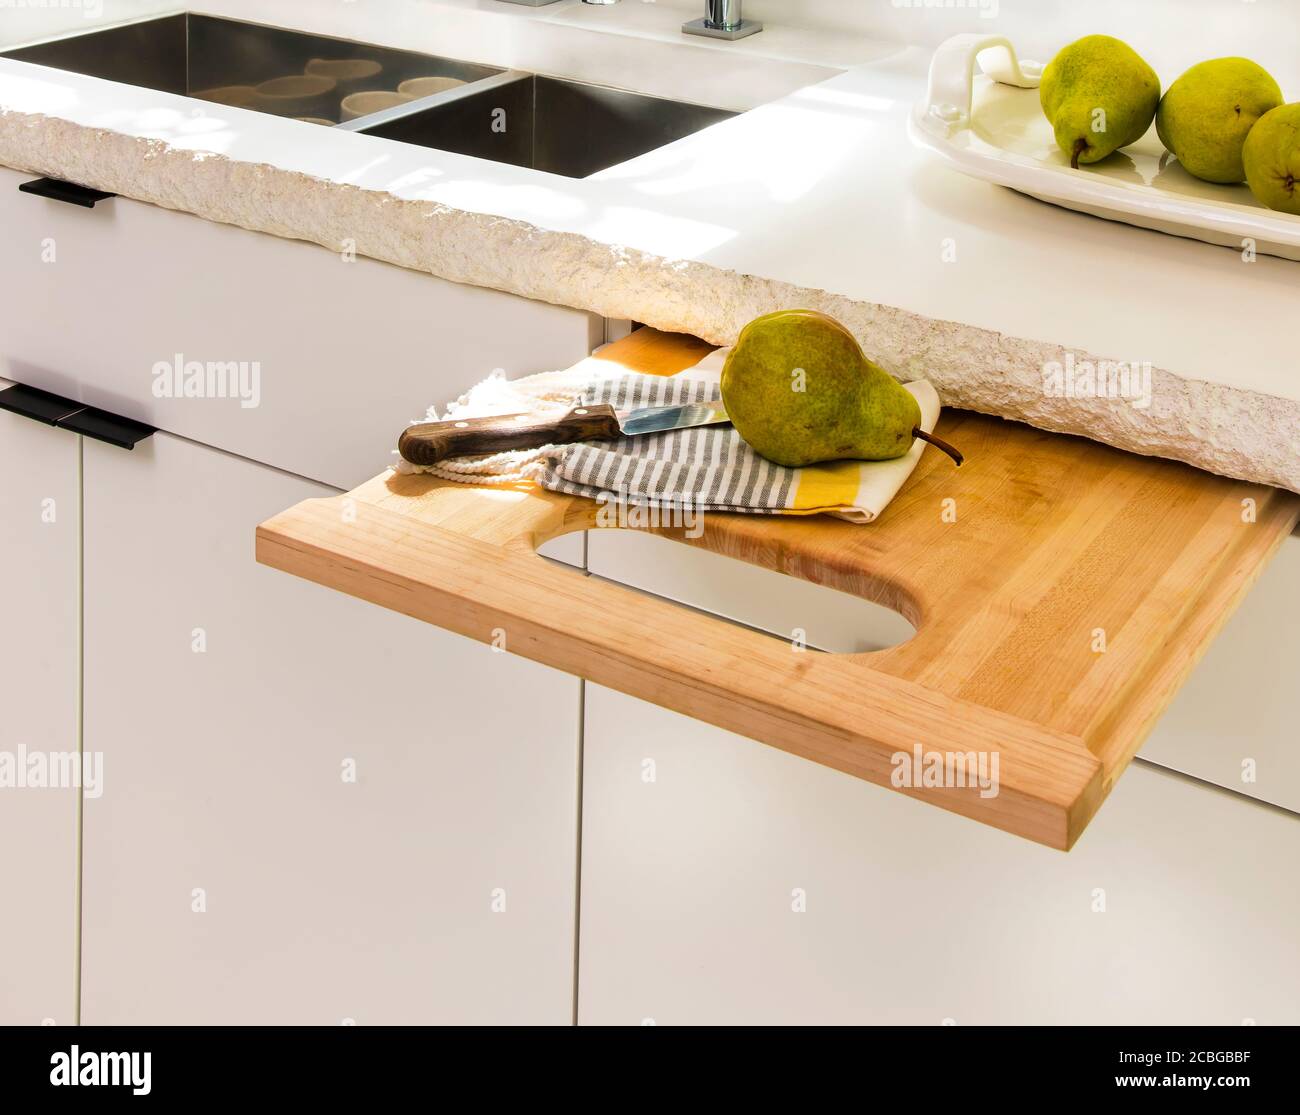 https://c8.alamy.com/comp/2CBGBBF/contemporary-white-kitchen-with-concrete-countertop-pull-out-cutting-board-2CBGBBF.jpg